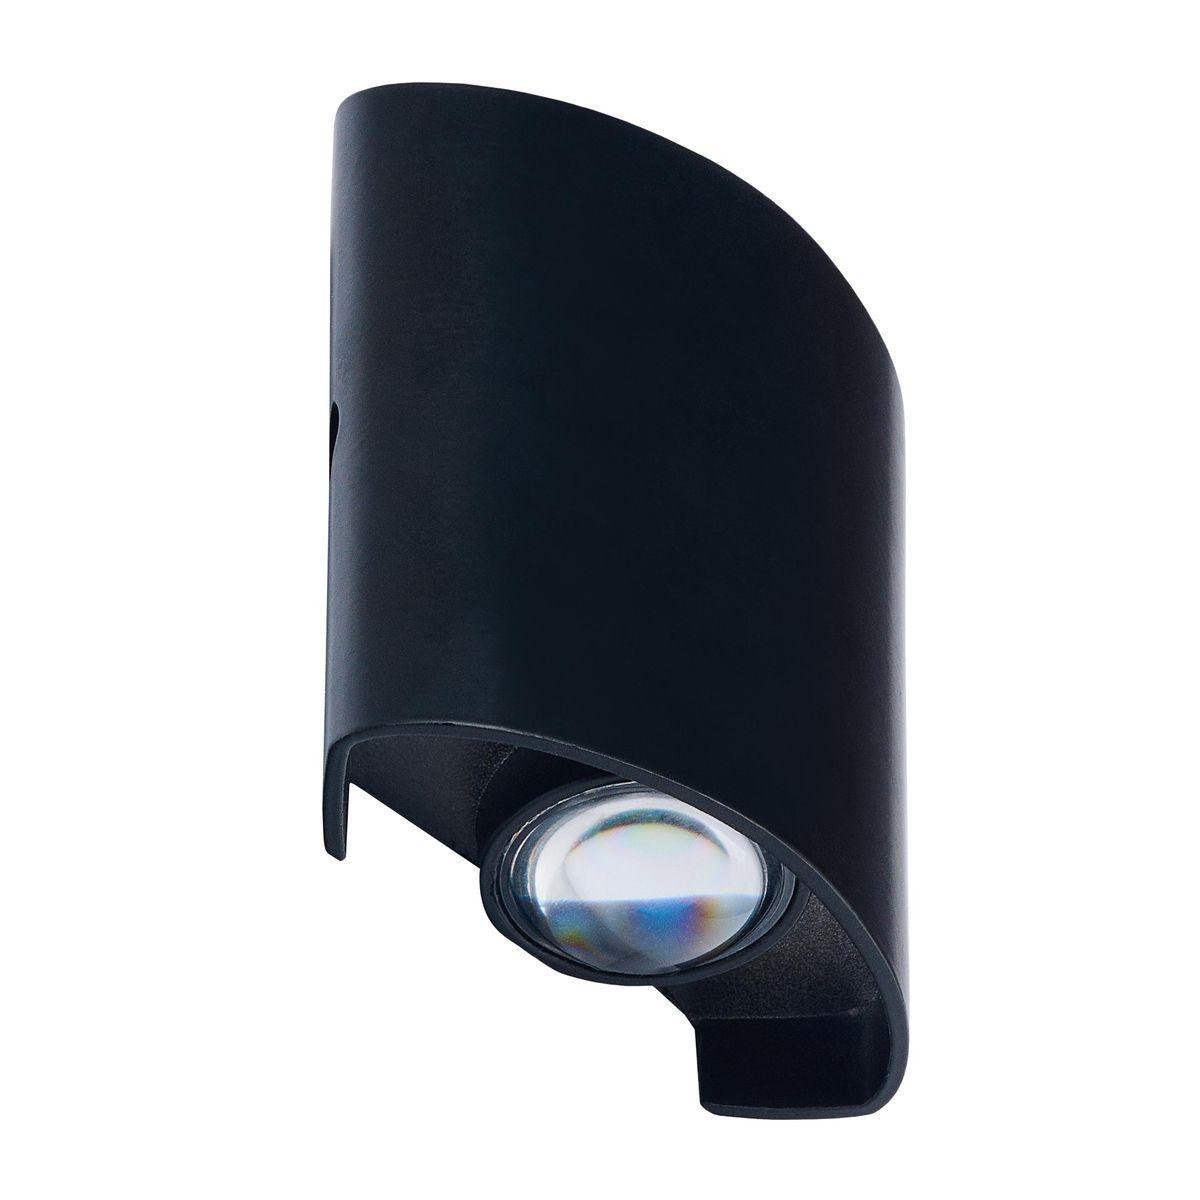 Настенный светодиодный светильник IMEX Cross IL.0014.0001-2 BK насос циркуляционный stout spc 0001 3240180 32 40 180 0 5 квт 12 6 м³ ч труб монтаж g 2